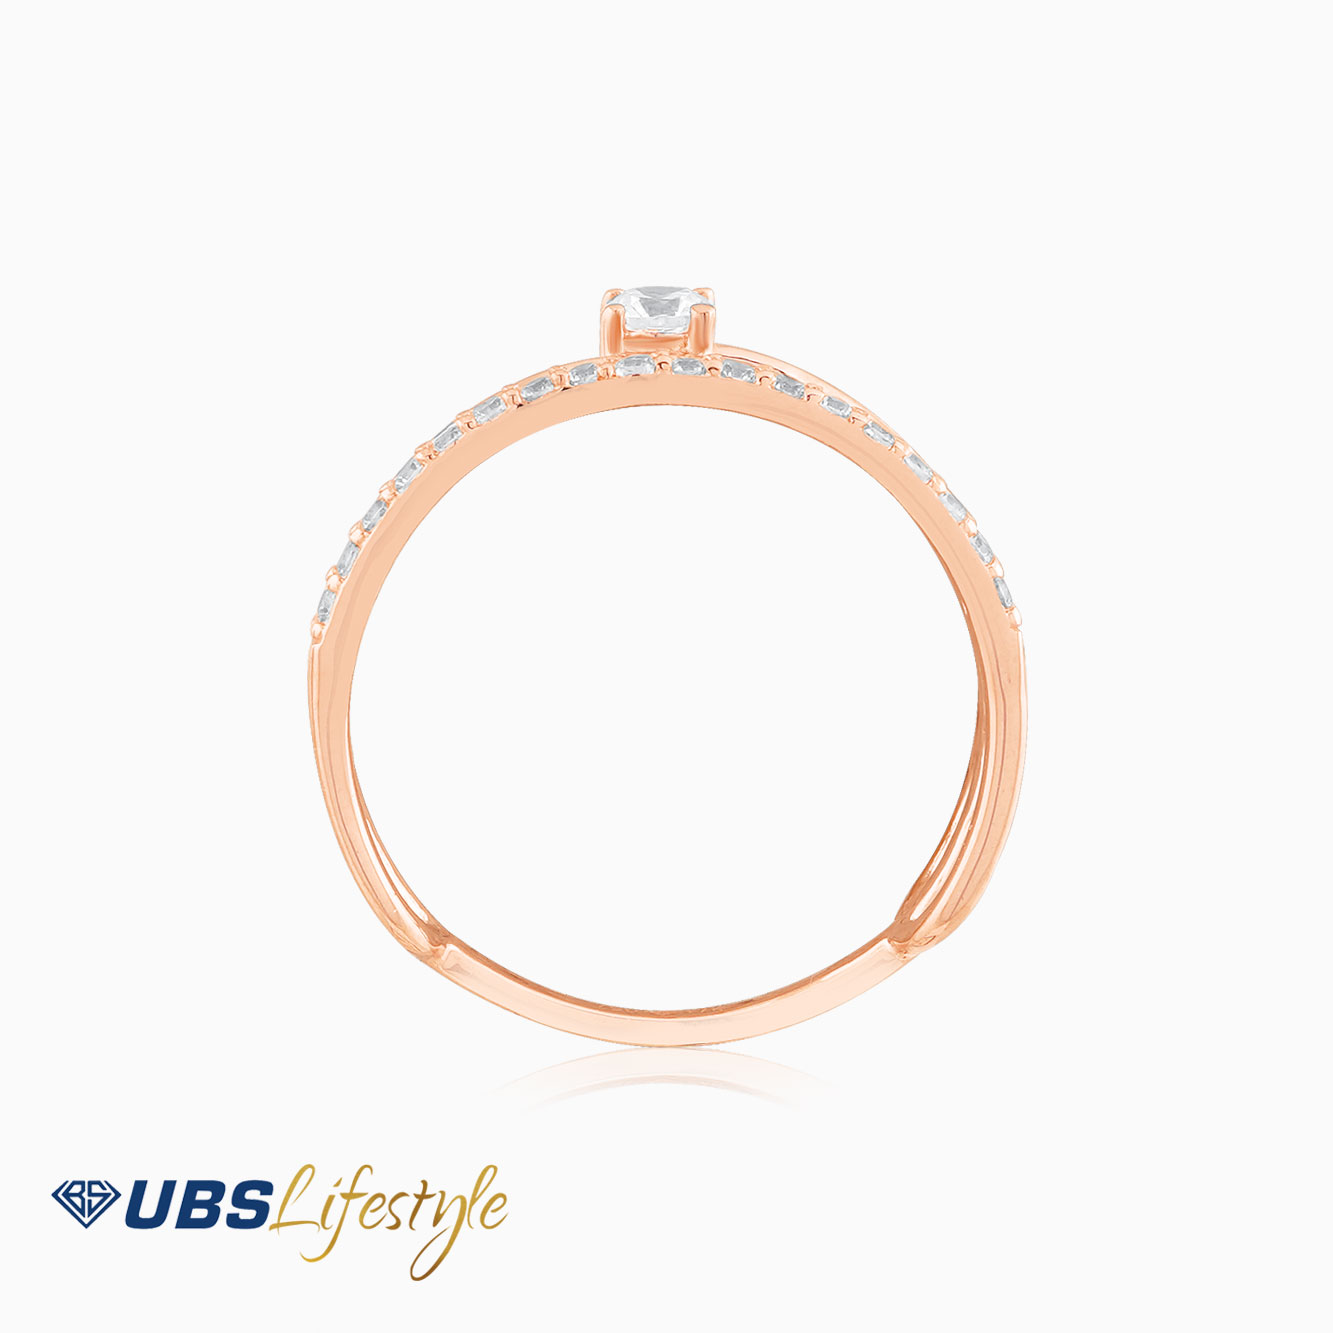 UBS Cincin Emas - Cc15830 - 17K